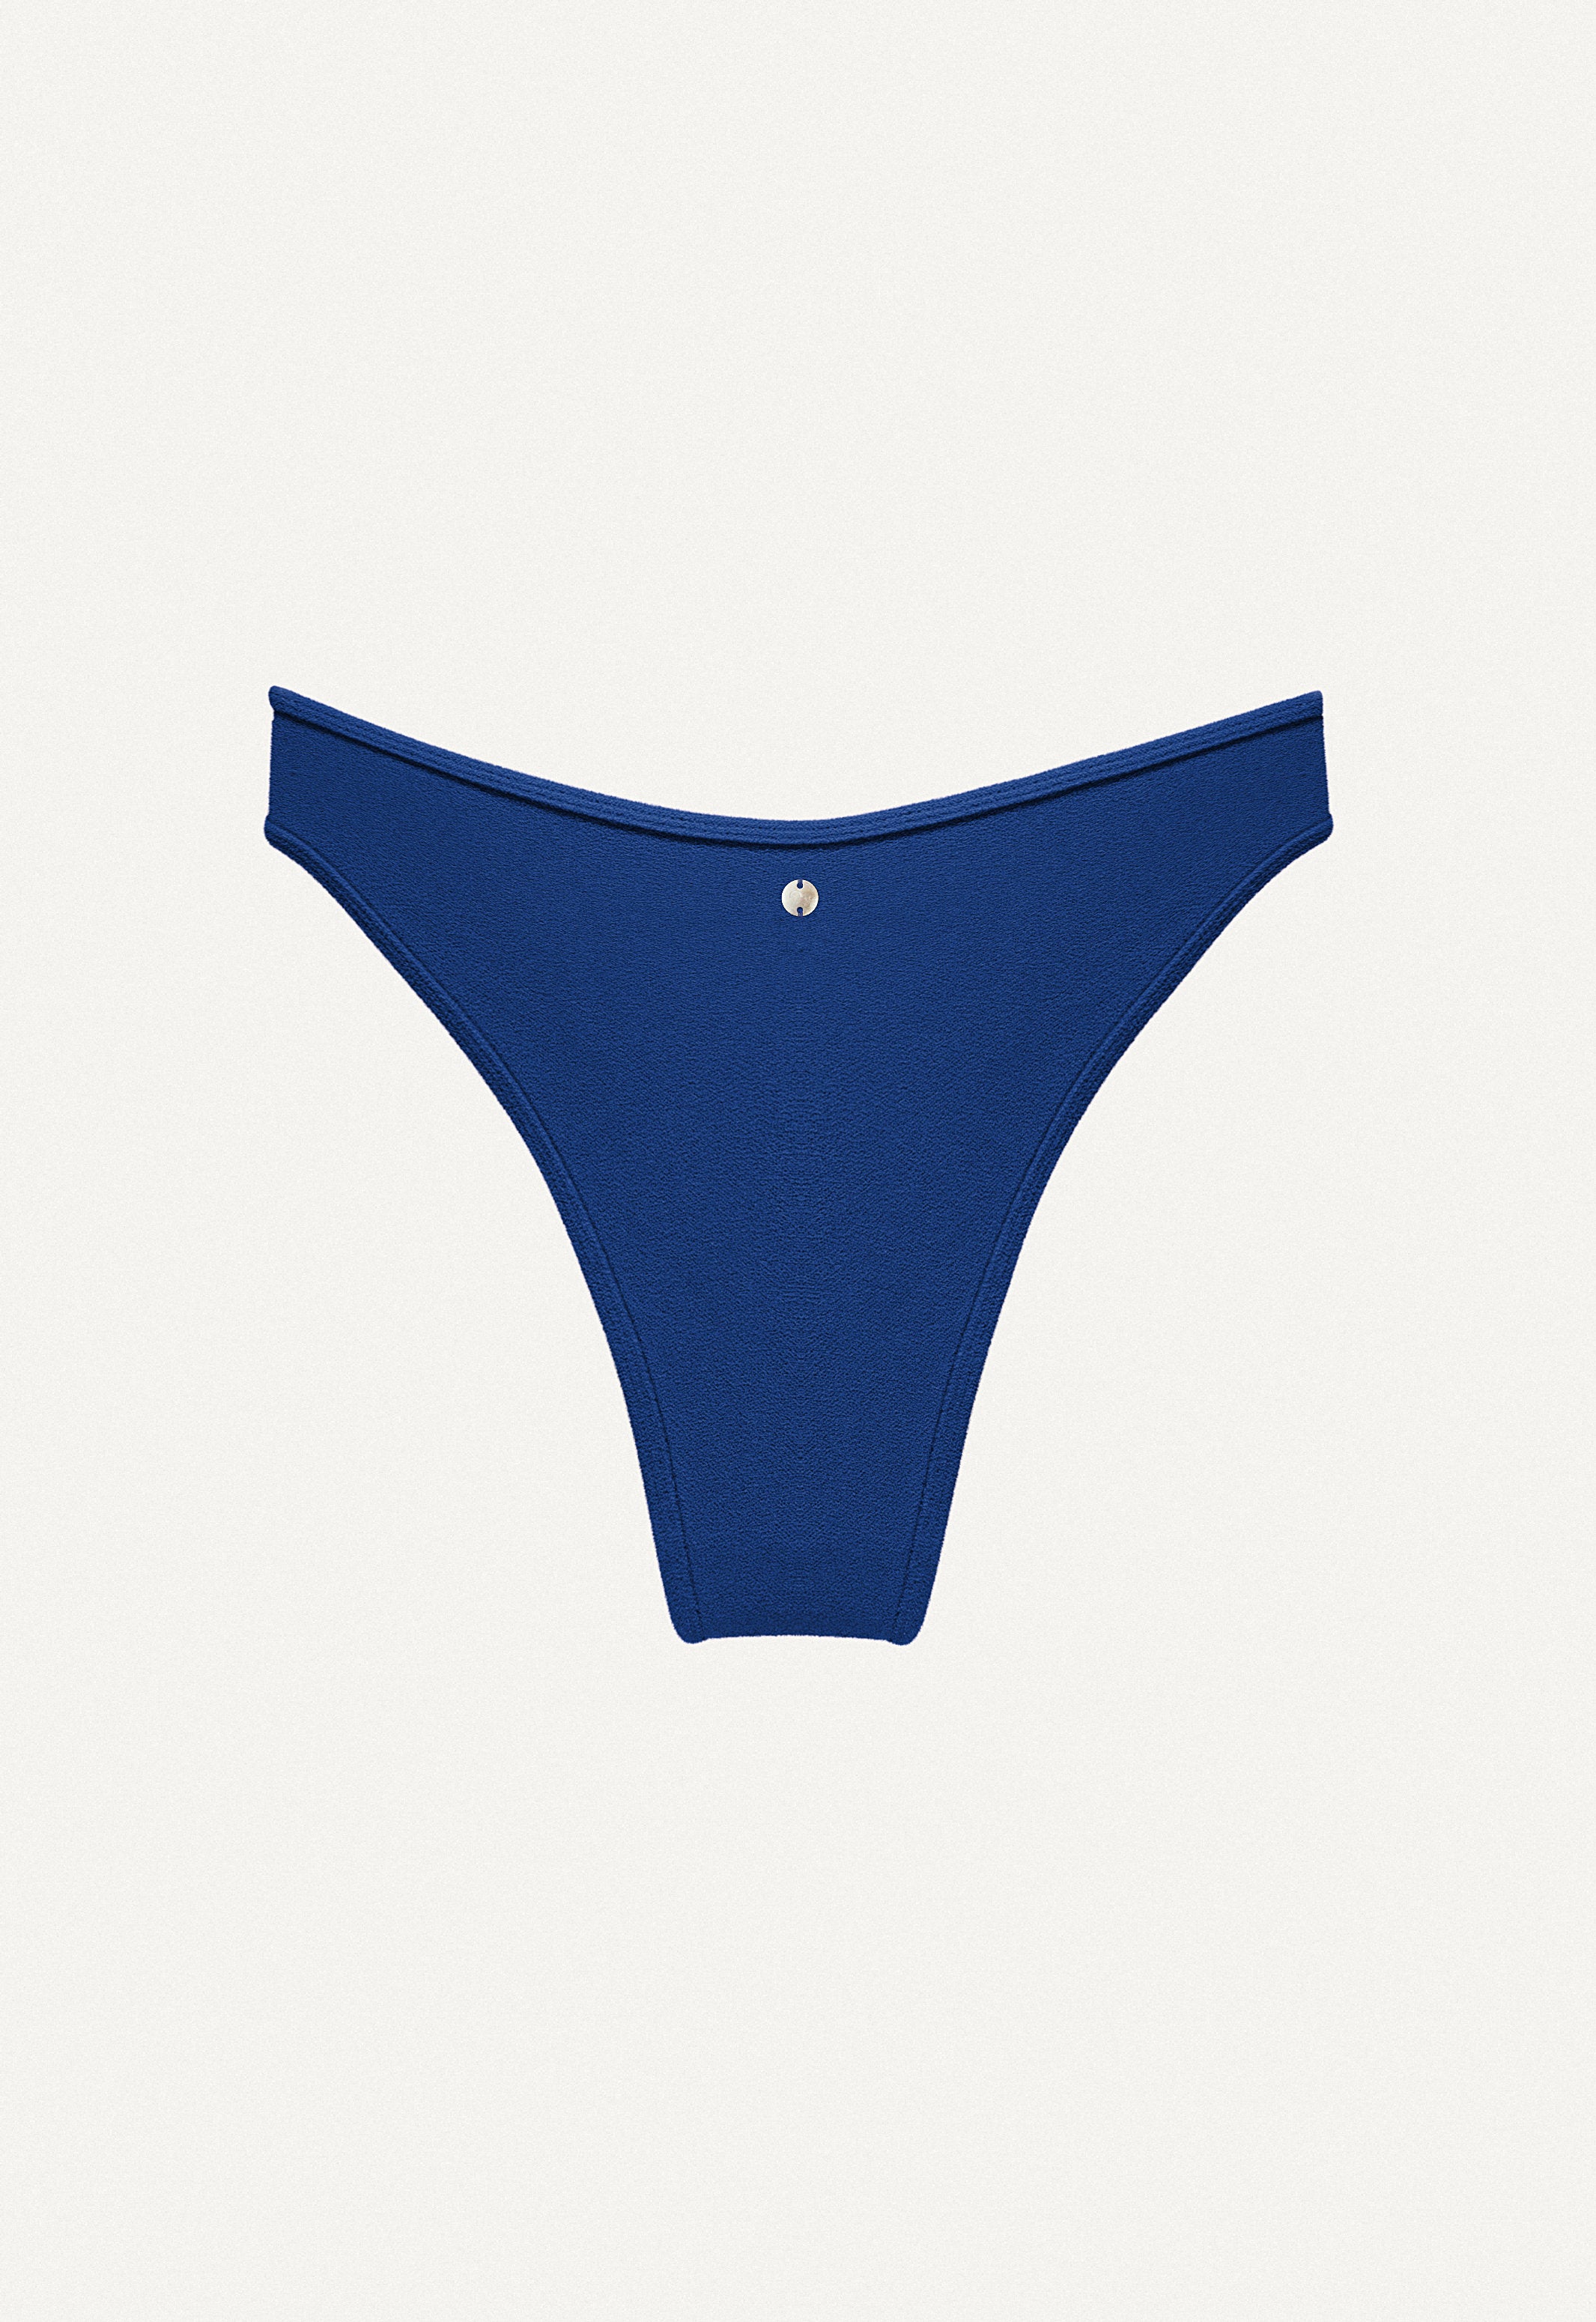 Bikini Bottom "Notos" in dark blue terry